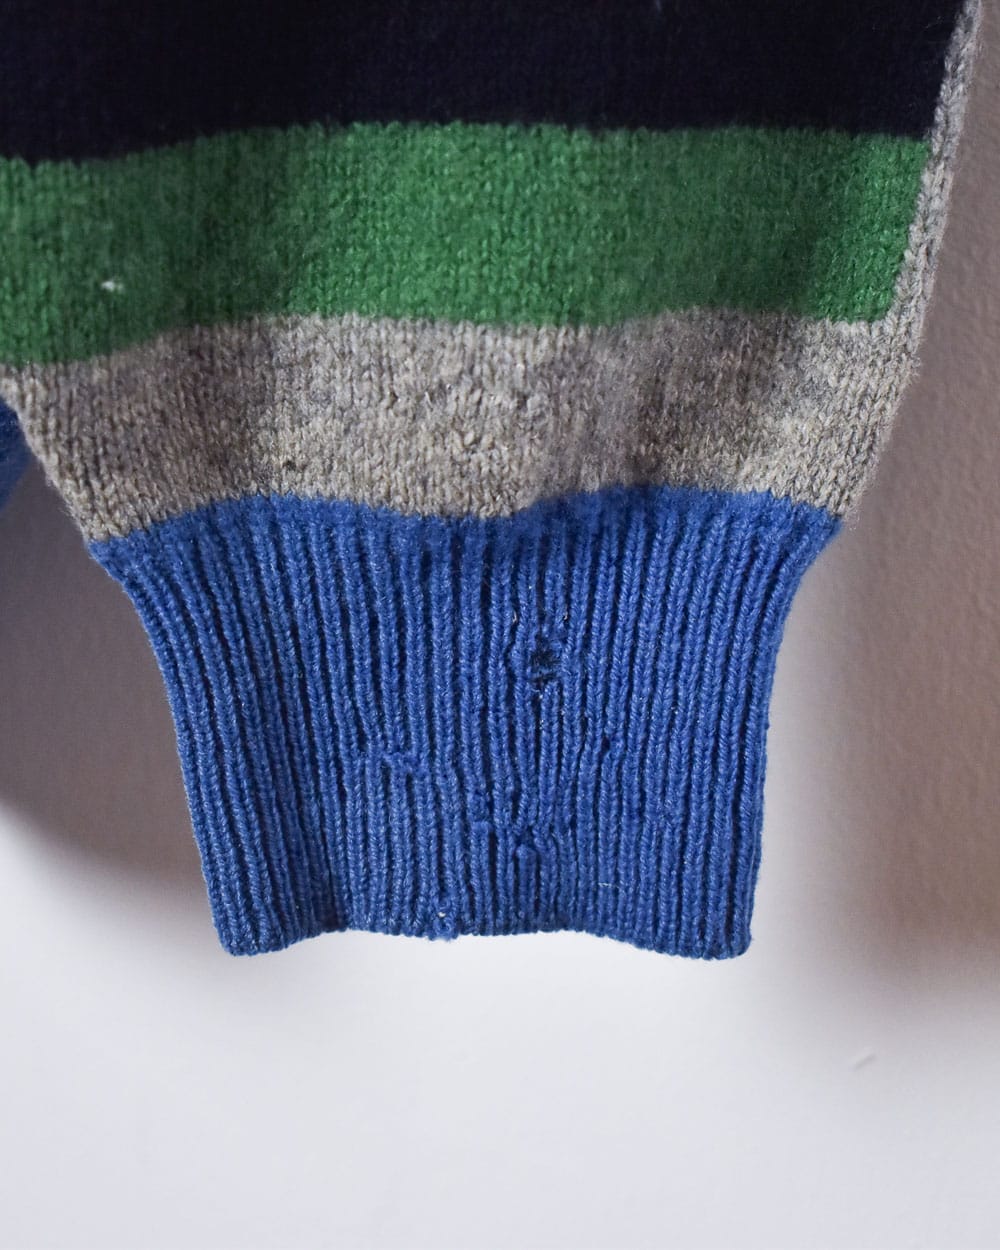 Blue Paca Patterned Knitted Sweatshirt - Medium